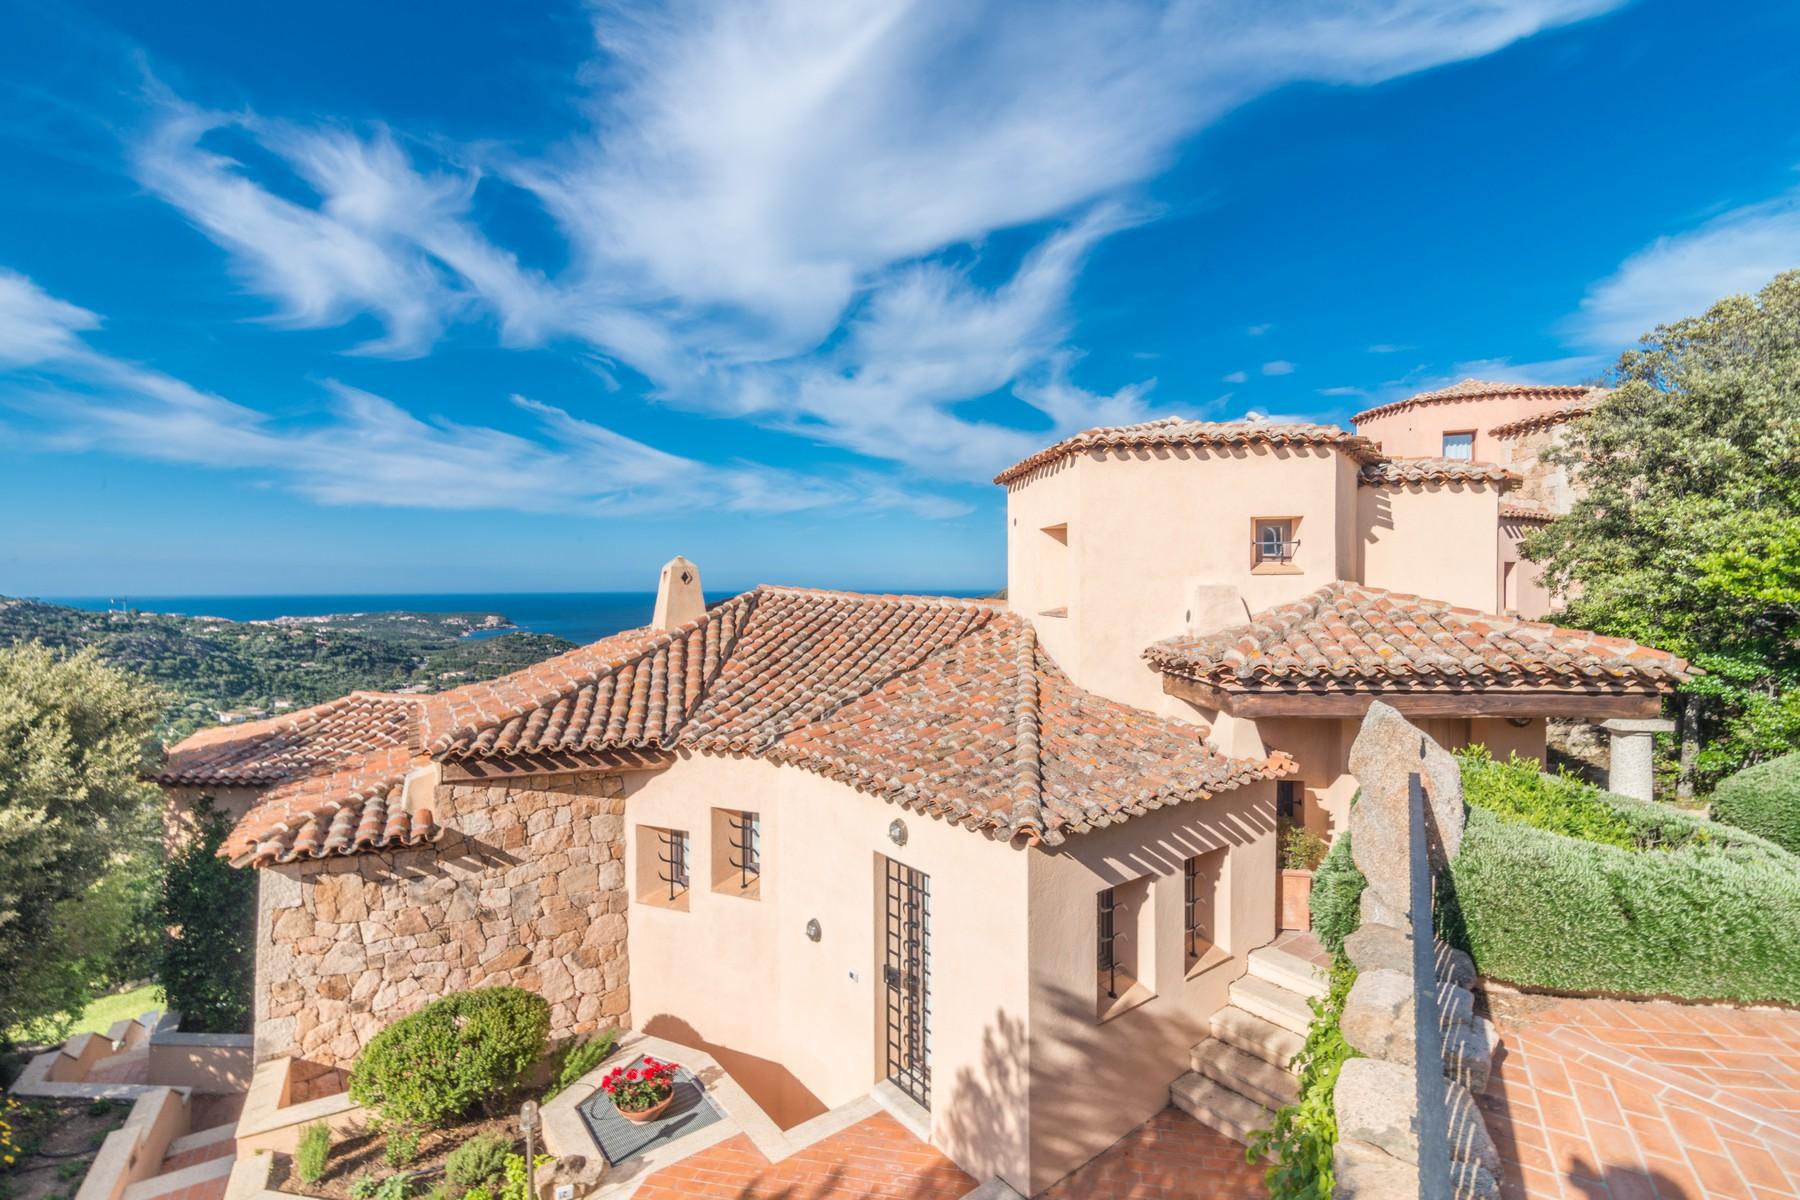 Porto Cervo Abbiadori Splendide villa jumelée avec vue sur le golfe de Pevero - 36